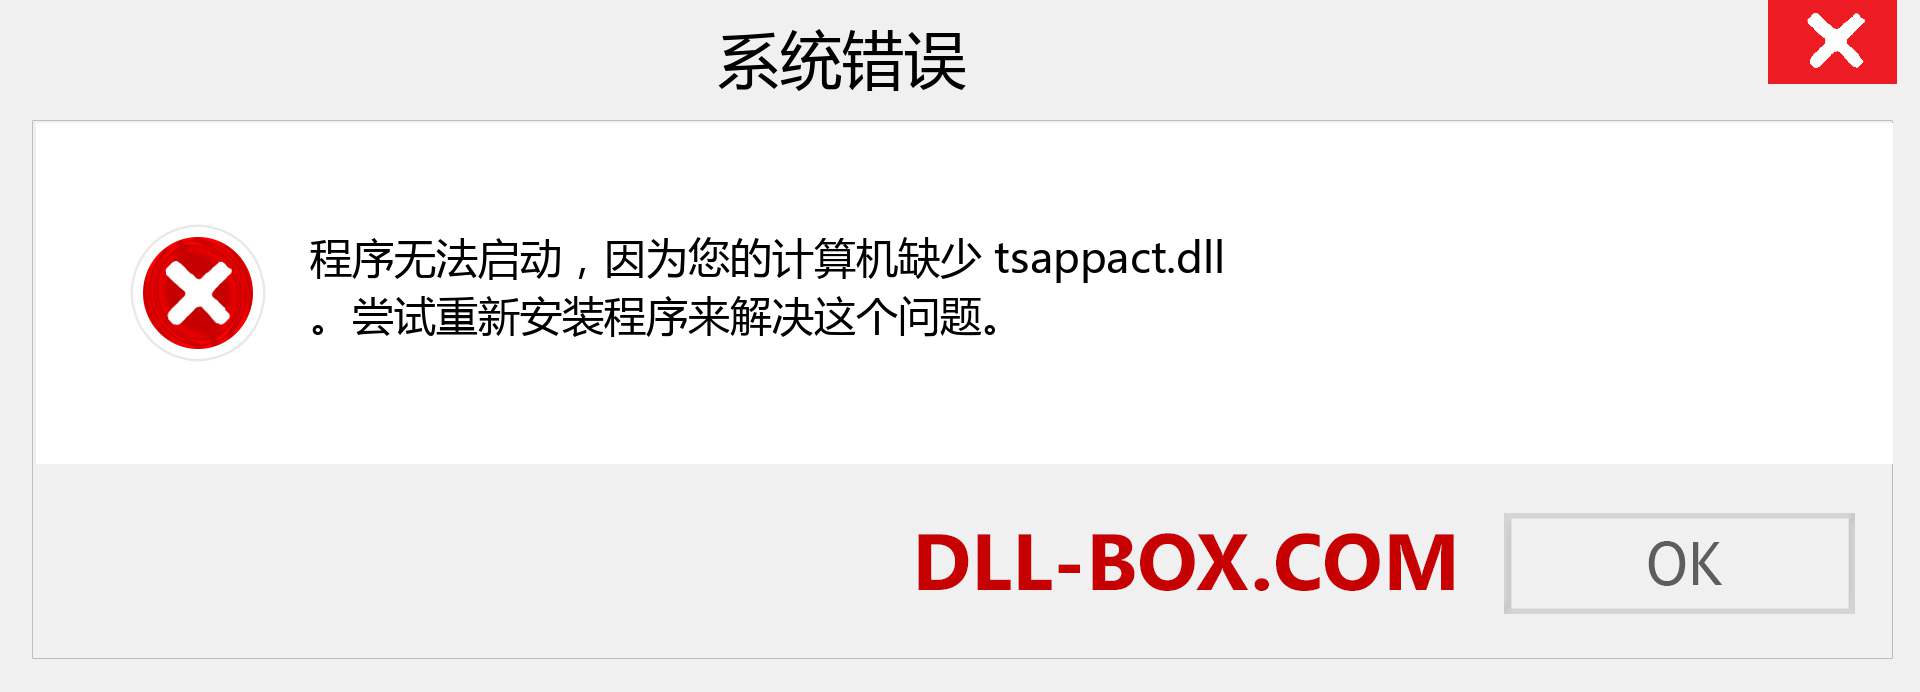 tsappact.dll 文件丢失？。 适用于 Windows 7、8、10 的下载 - 修复 Windows、照片、图像上的 tsappact dll 丢失错误